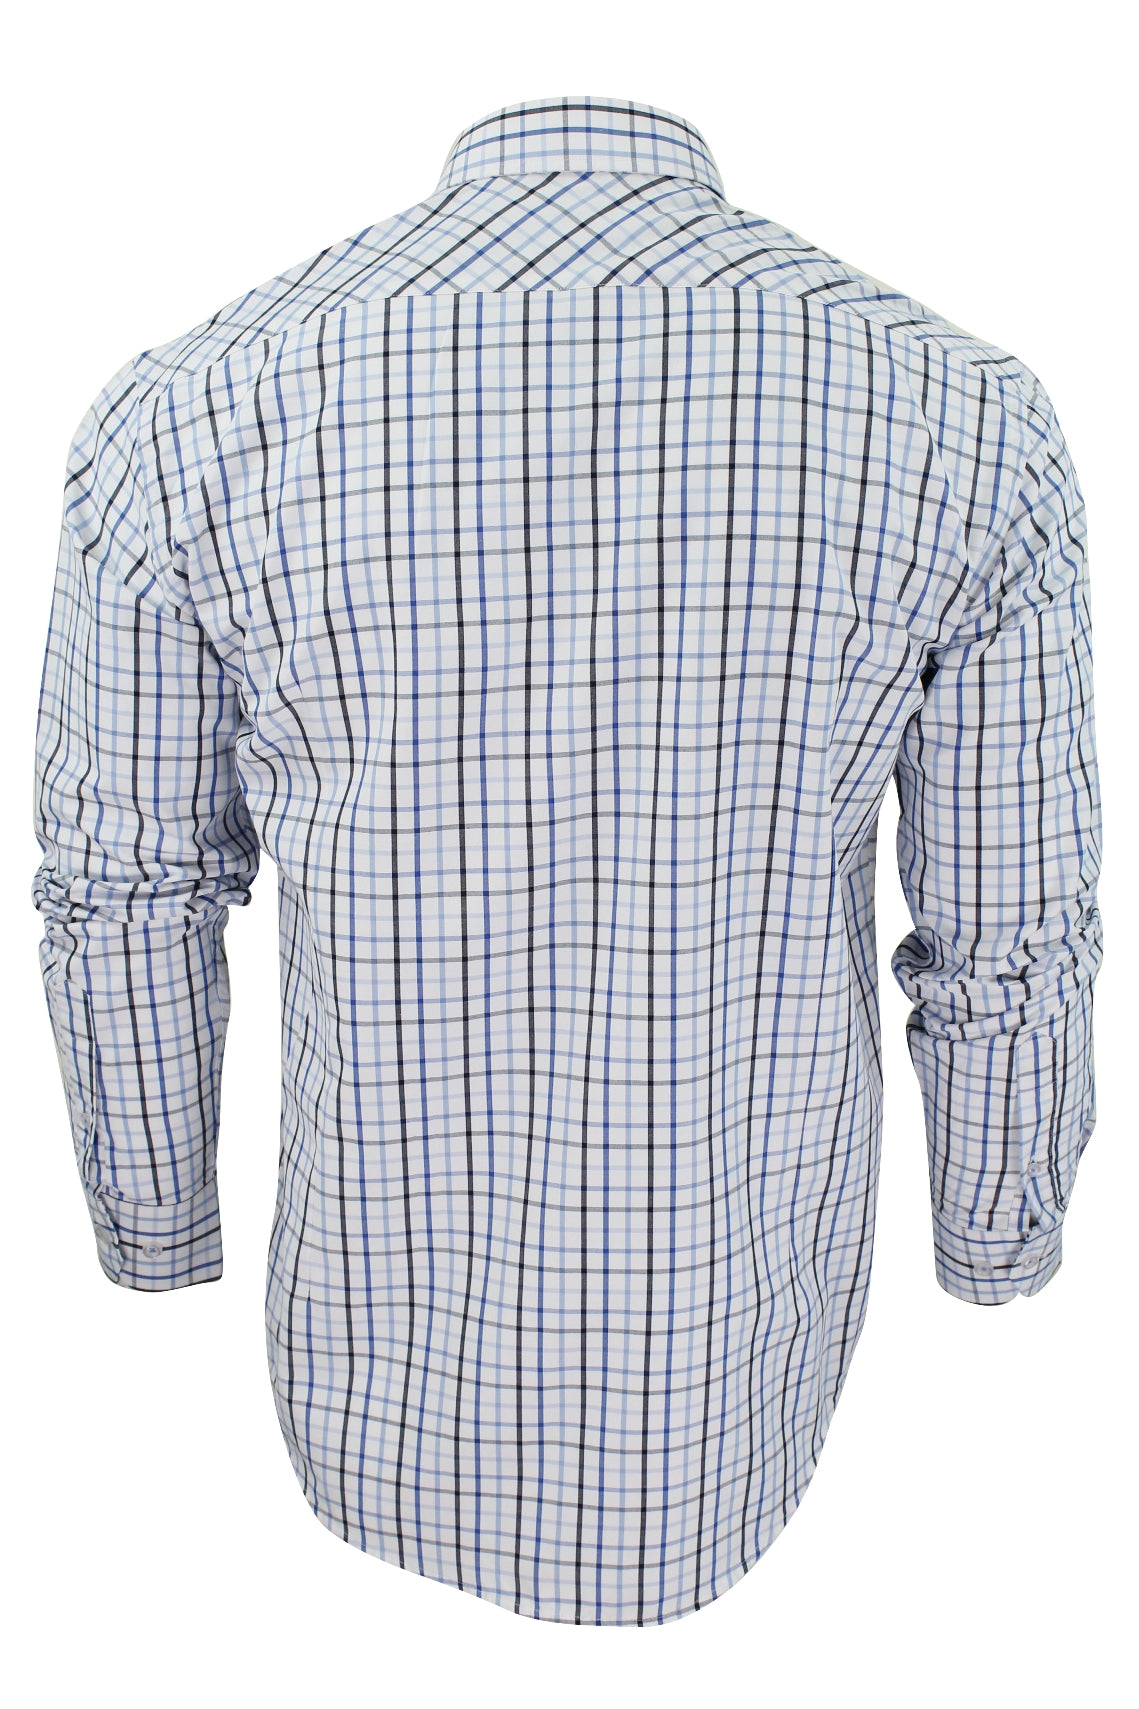 Mens Long Sleeved Check Shirt by Xact Clothing, 03, 1510116, Blue